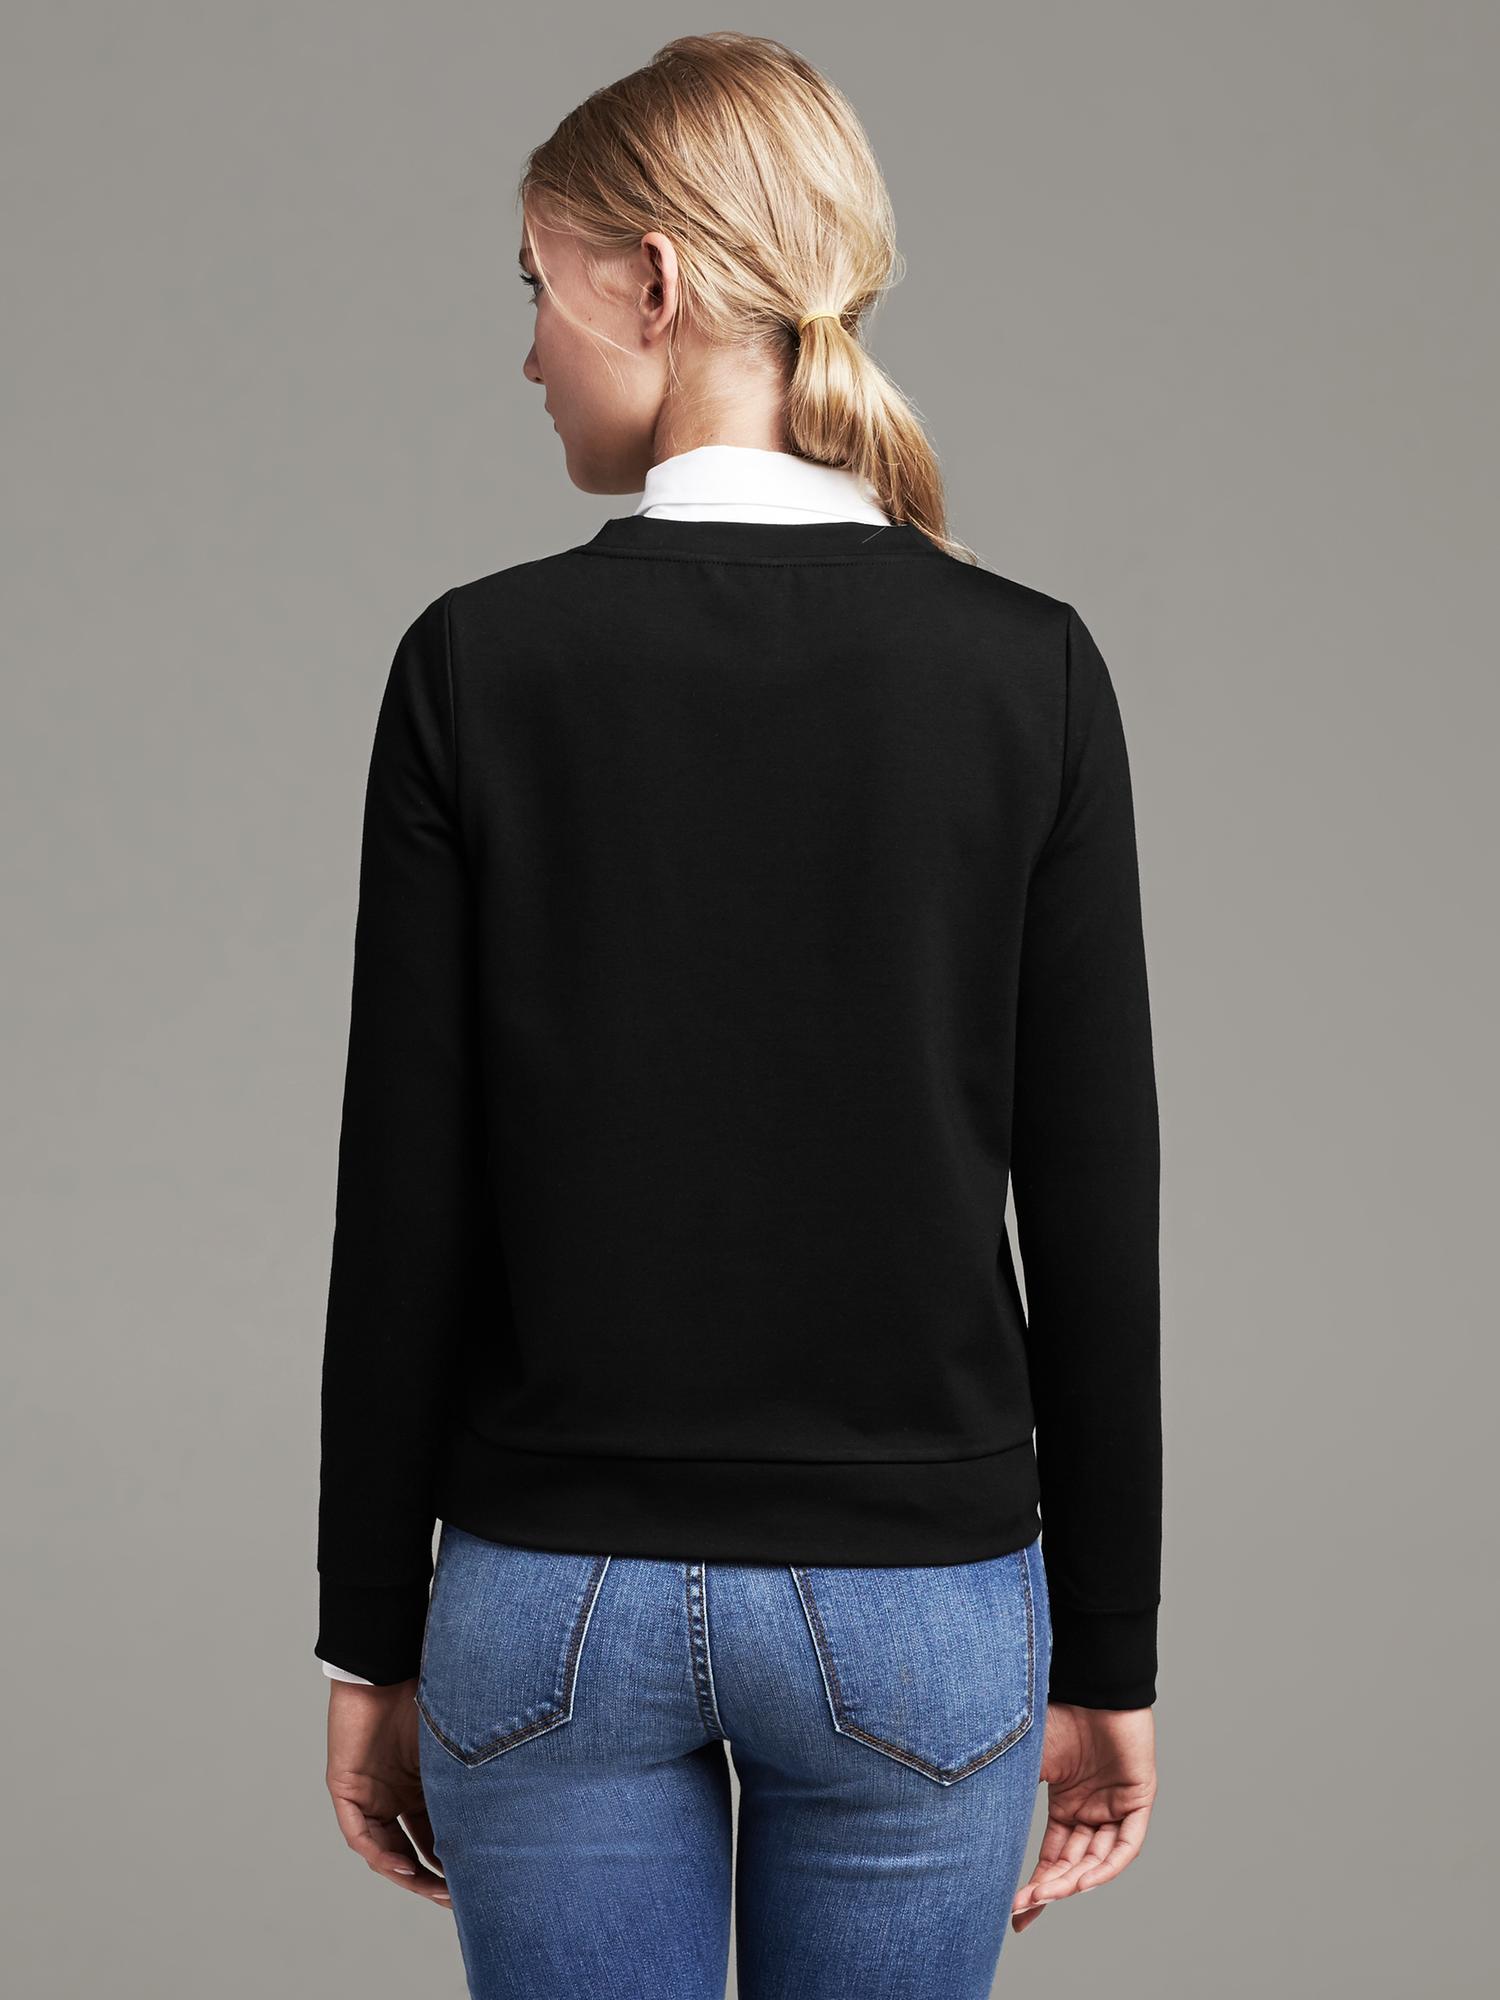 "The Little Black Sweatshirt" Pullover